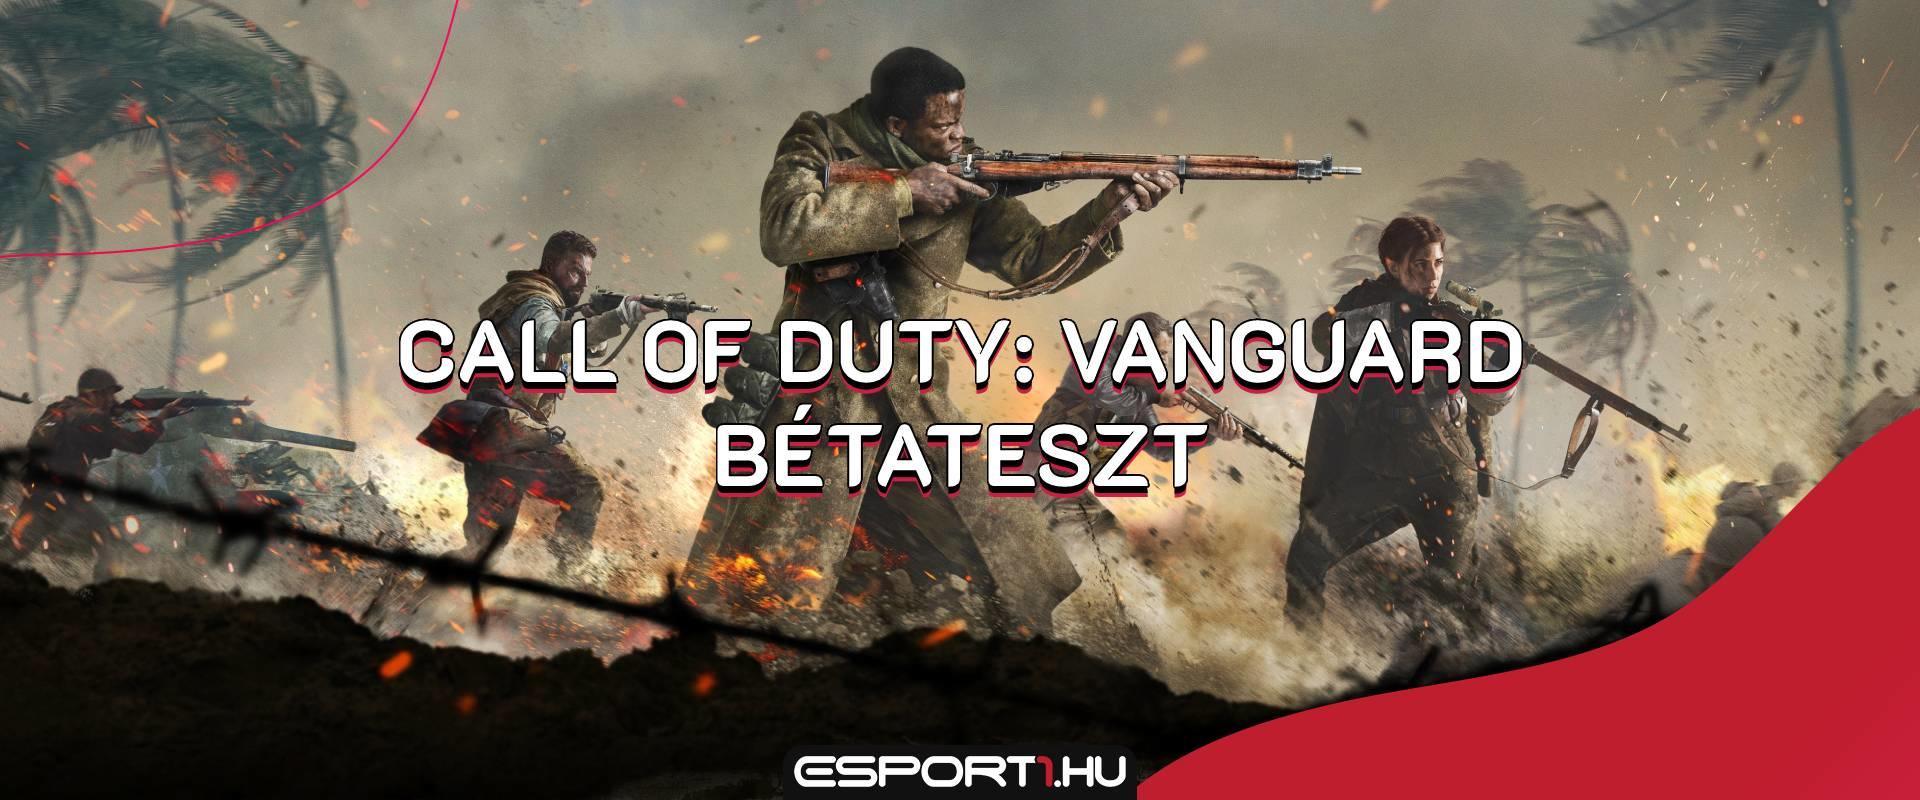 Call of Duty: Vanguard - Nem túl biztató a béta